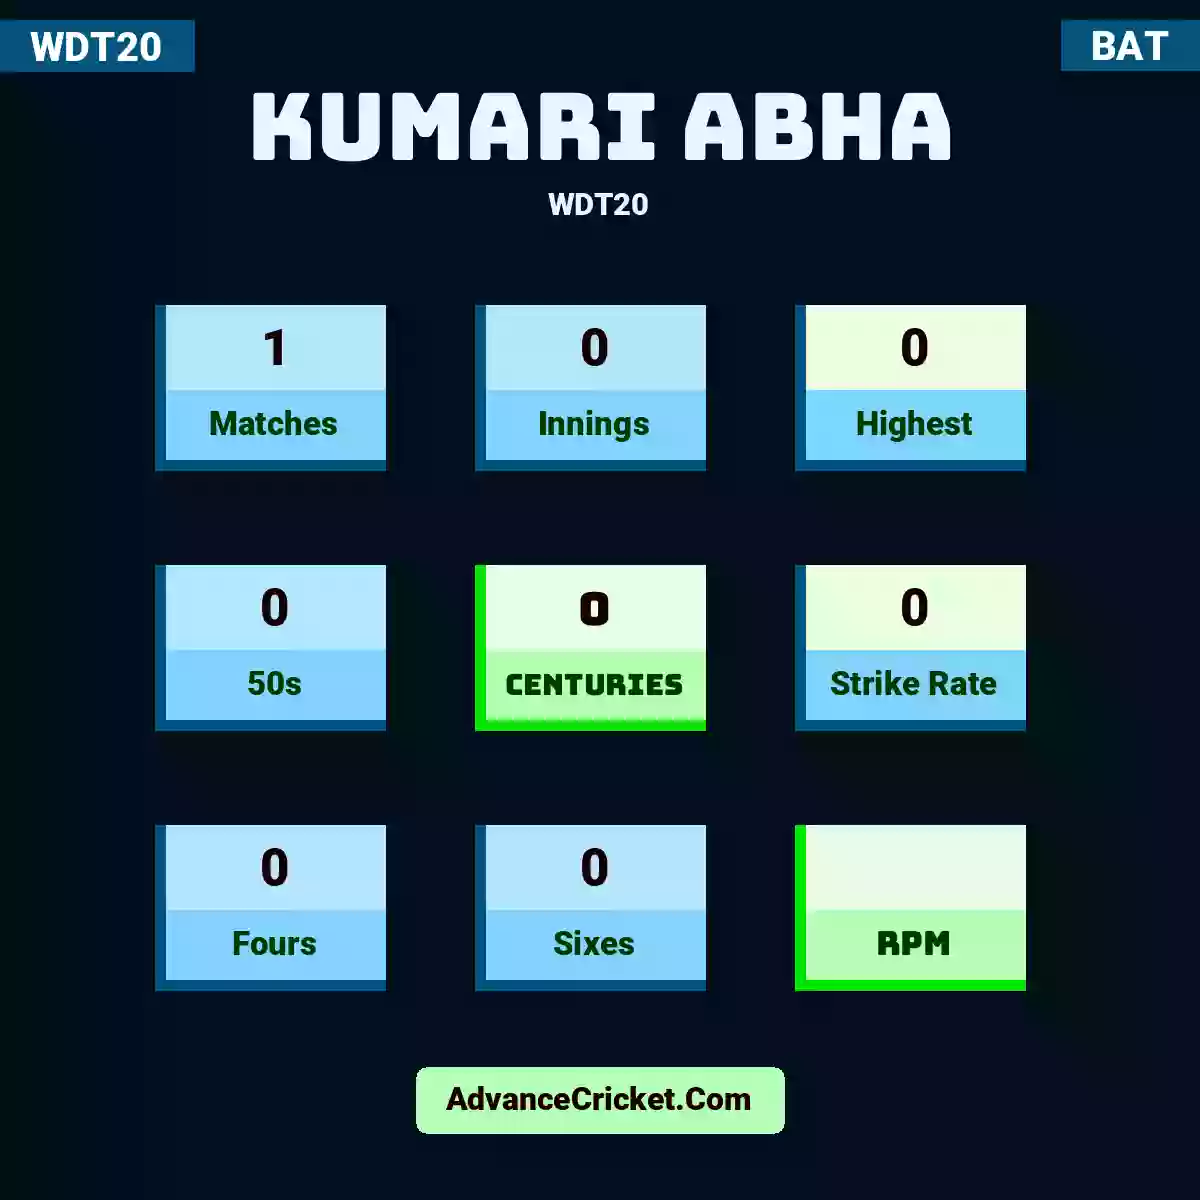 Kumari Abha WDT20 , Kumari Abha played 1 matches, scored 0 runs as highest, 0 half-centuries, and 0 centuries, with a strike rate of 0. K.Abha hit 0 fours and 0 sixes.